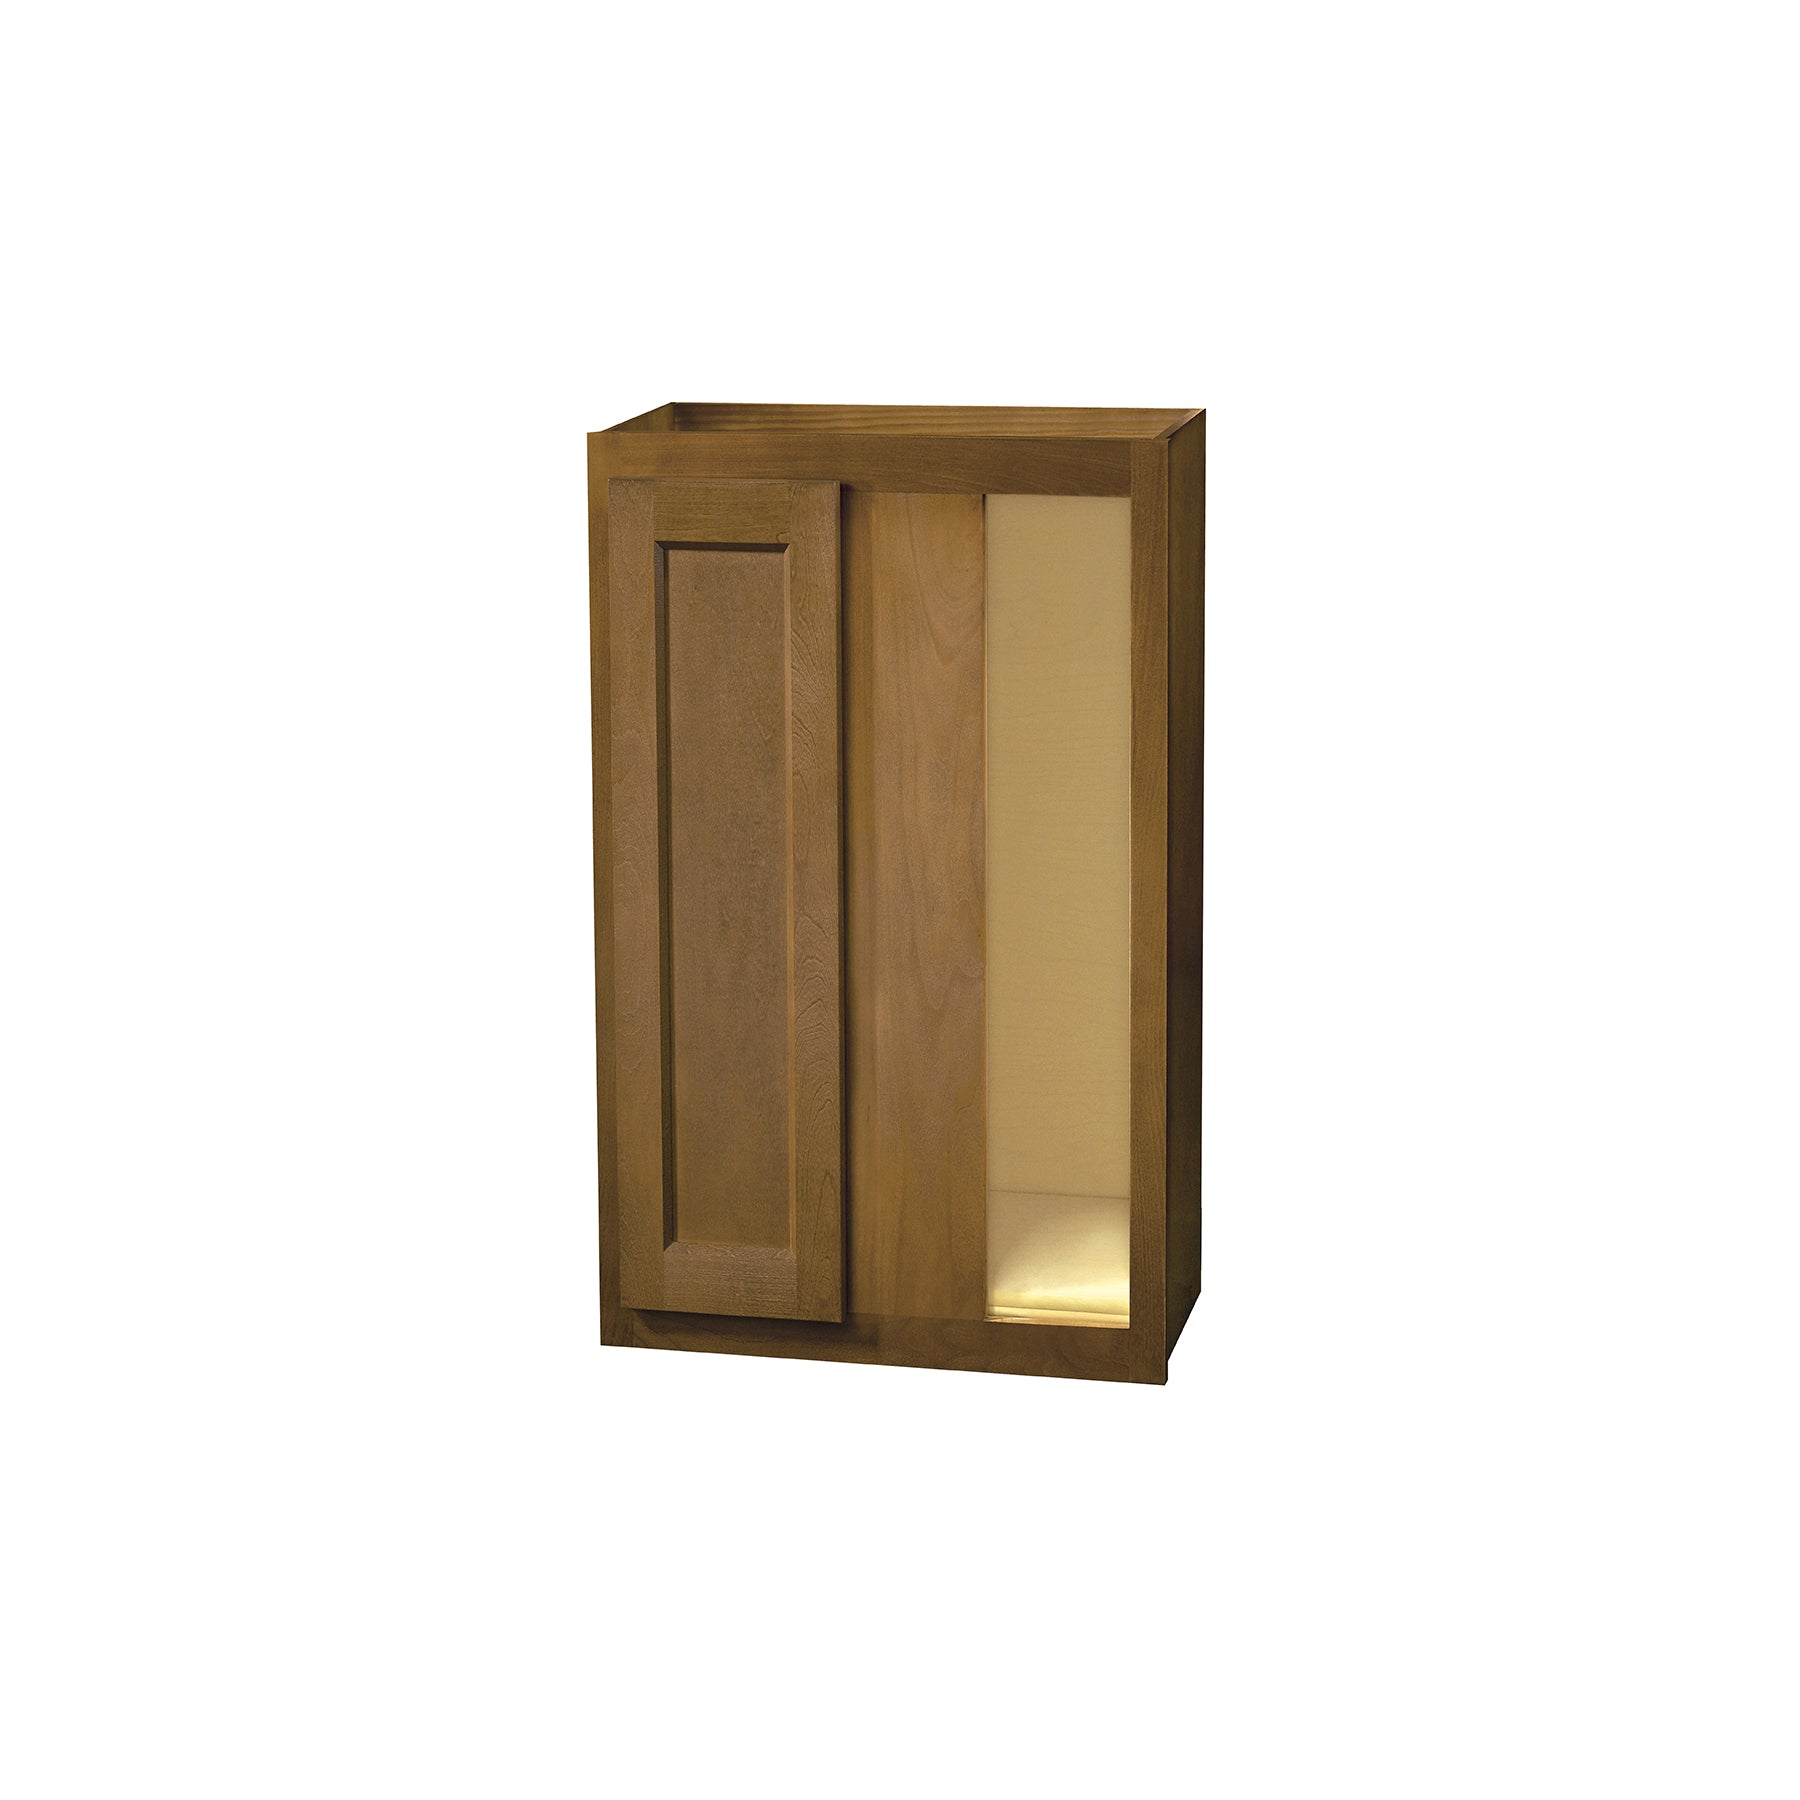 36 inch Wall Corner Cabinet - Single Door - Warmwood Shaker - 24 Inch W x 36 Inch H x 12 Inch D